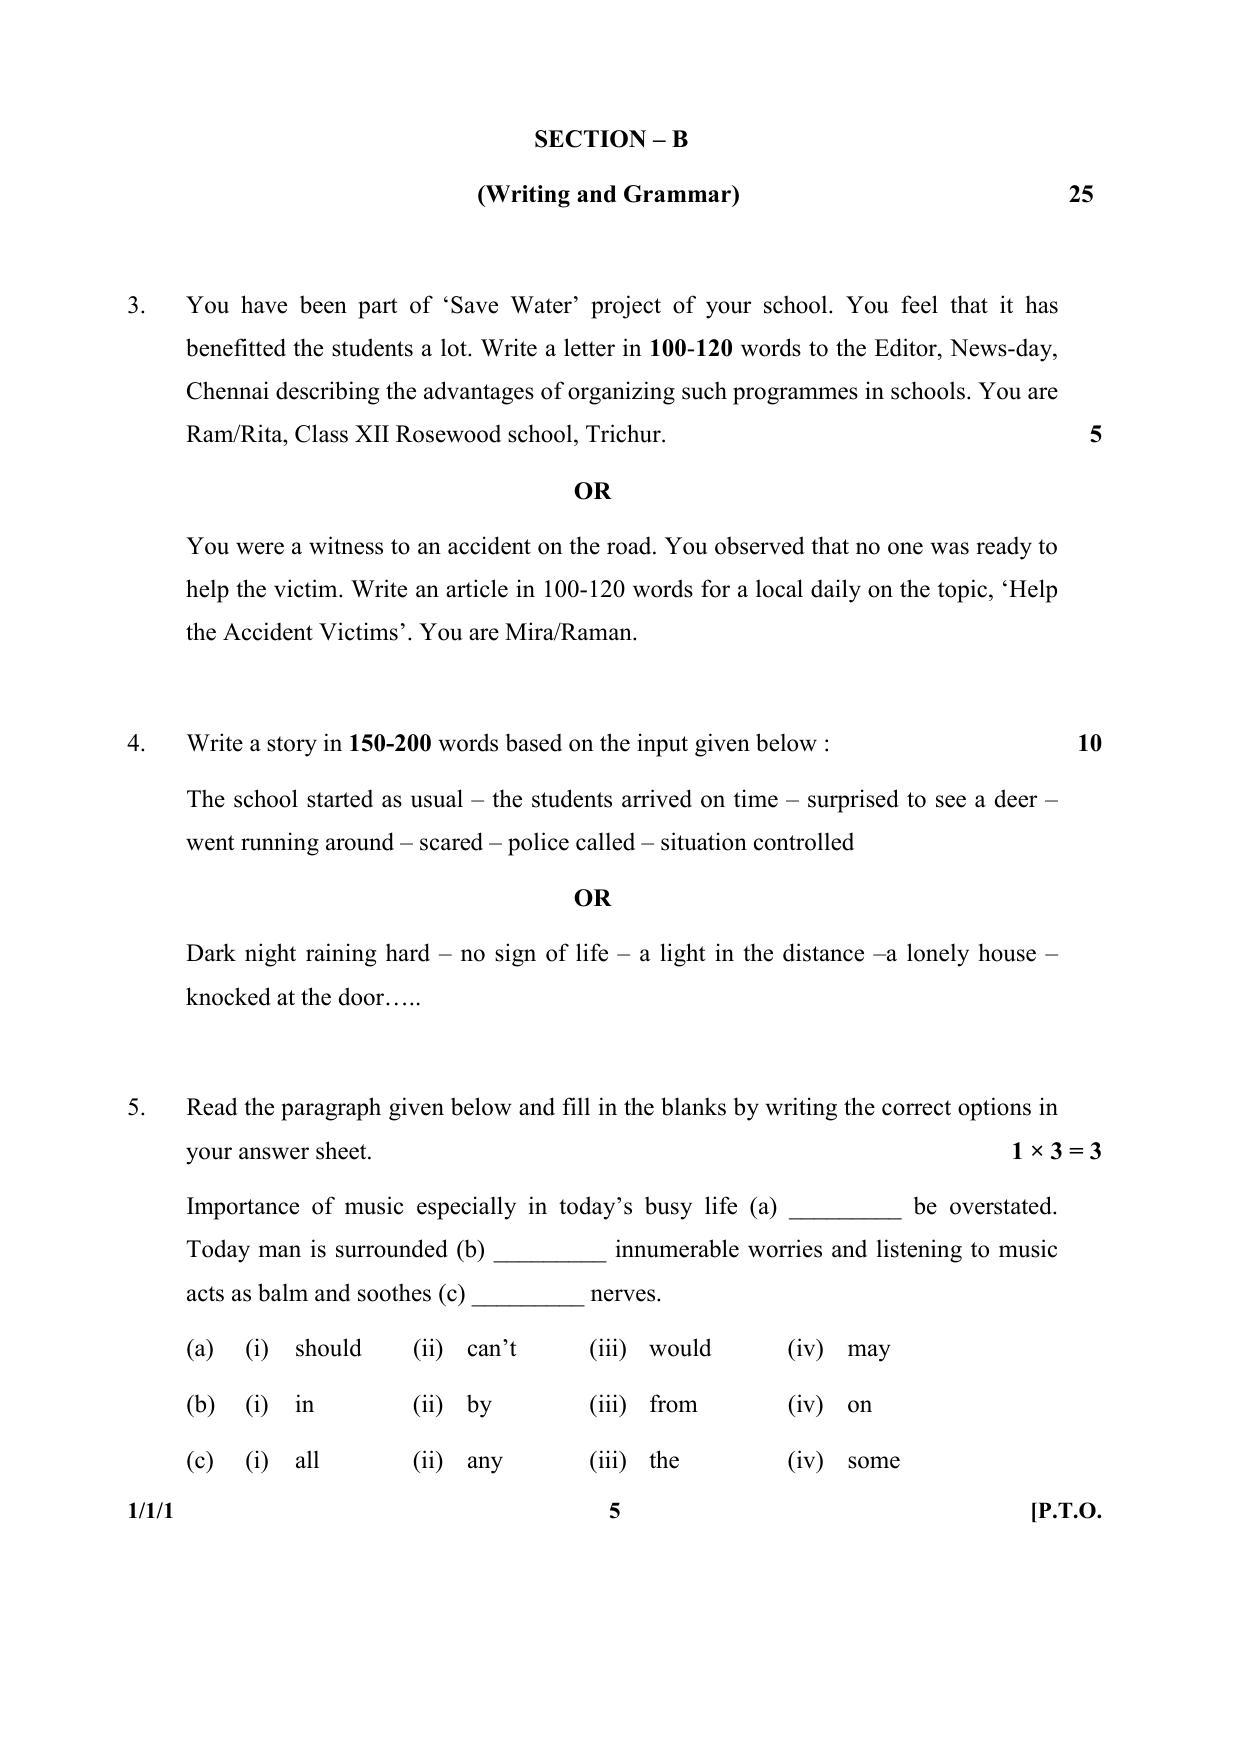 CBSE Class 10 1-1-1 (Eng.) 2017-comptt Question Paper - Page 5